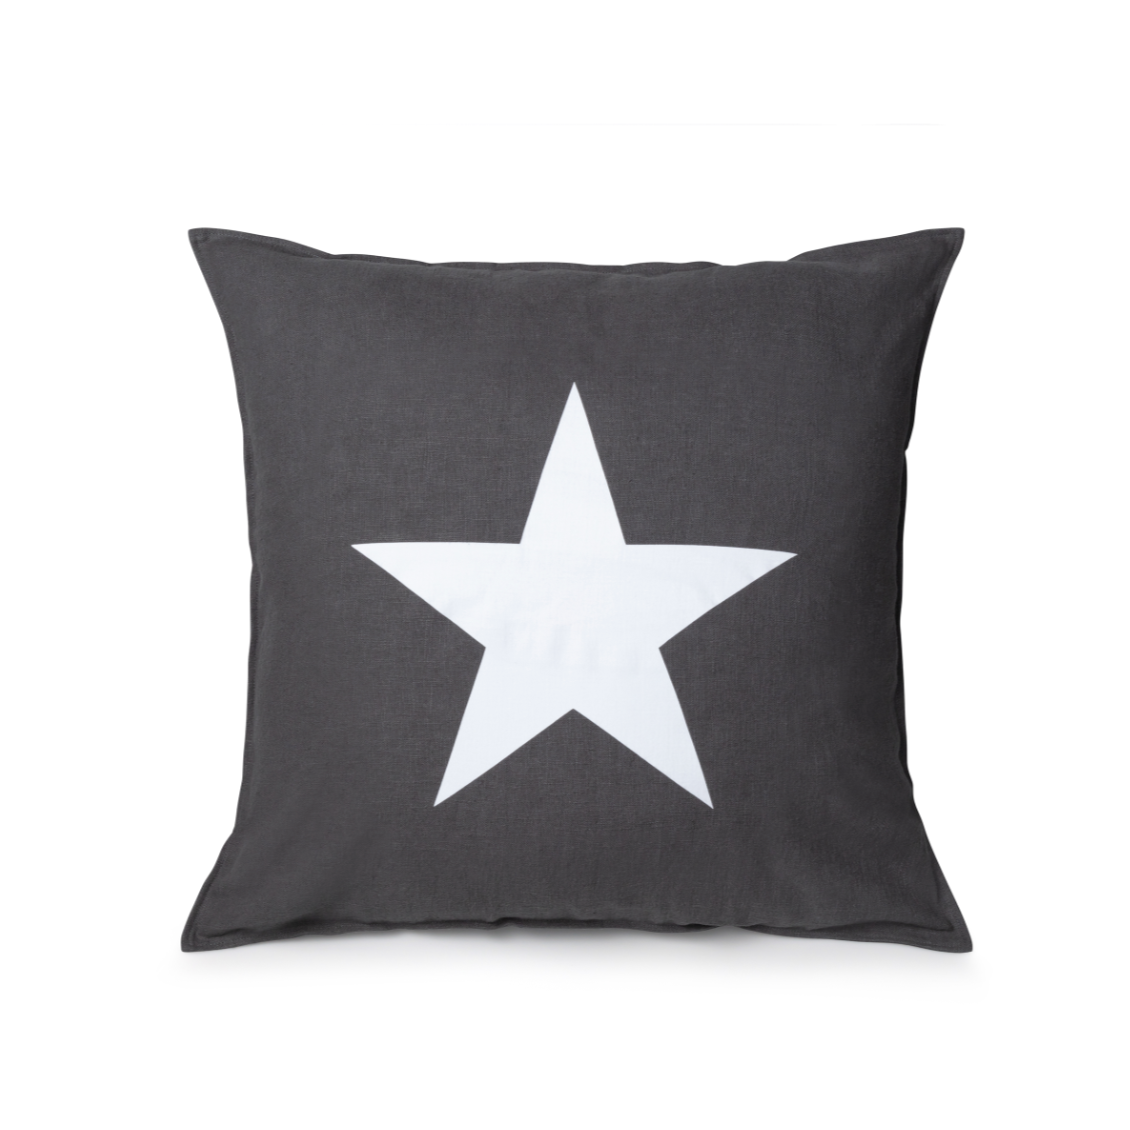 Giant Star Cushion - Charcoal